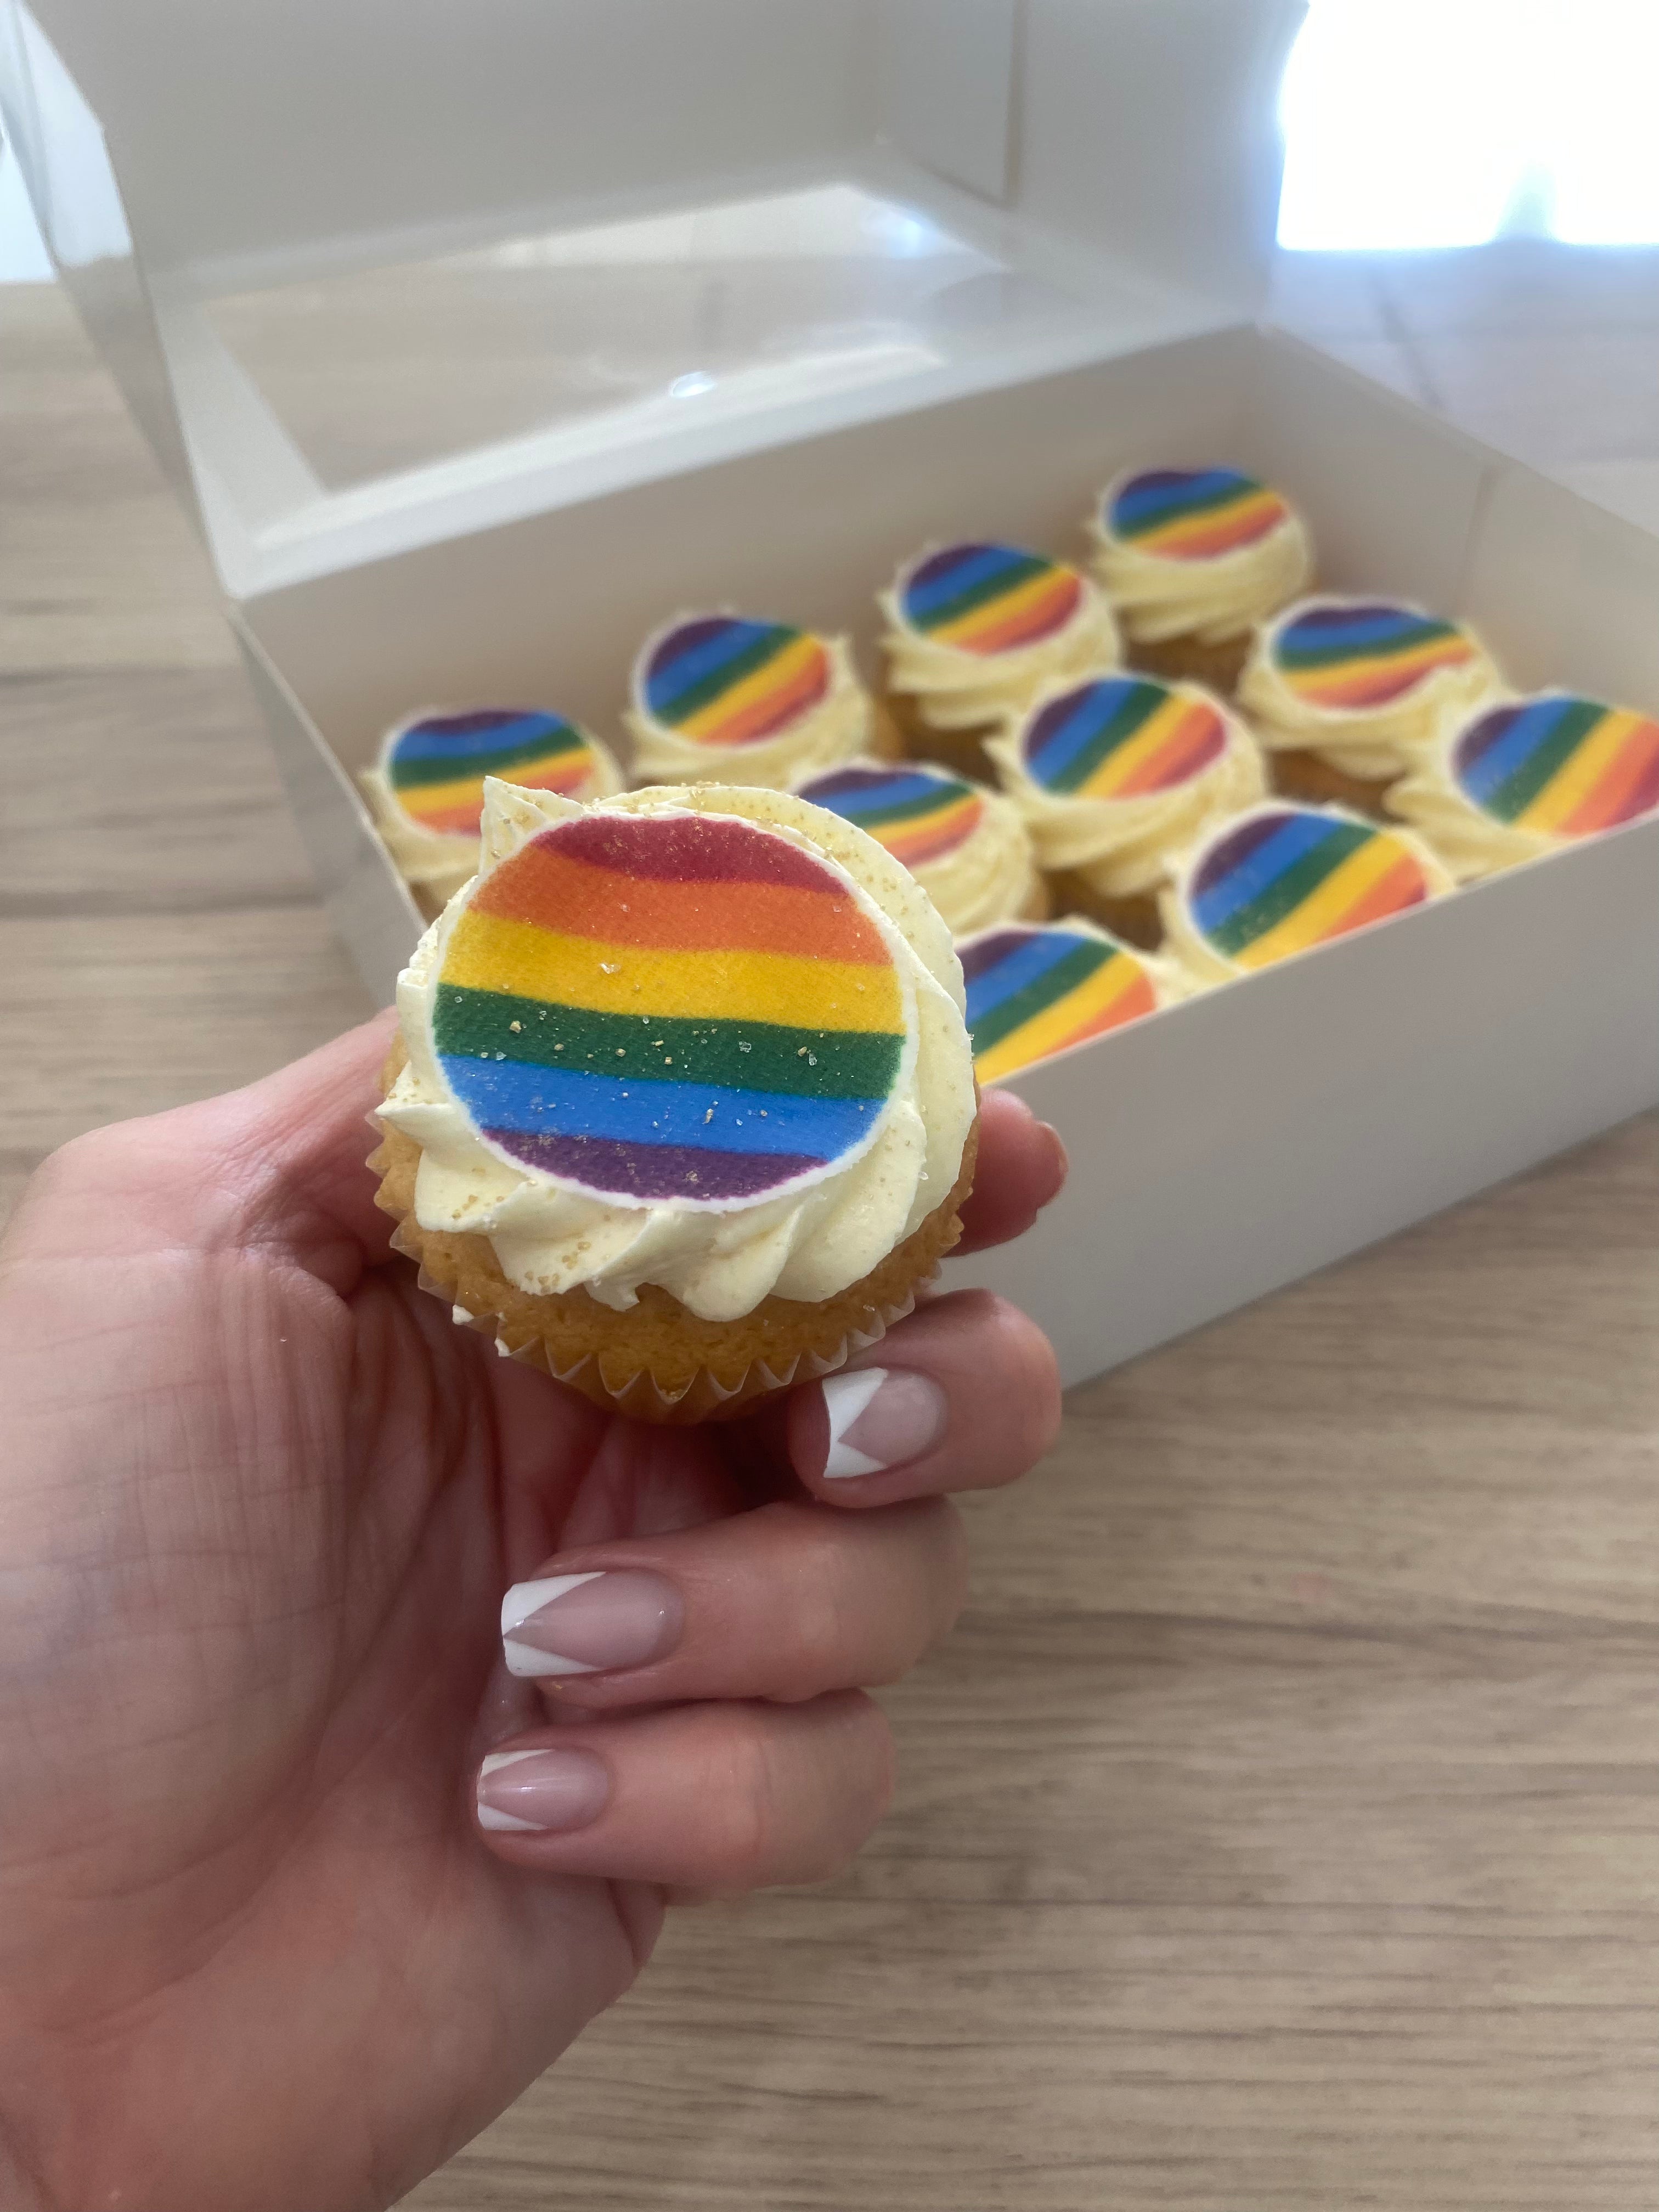 24 mini RAINBOW stripes cupcakes